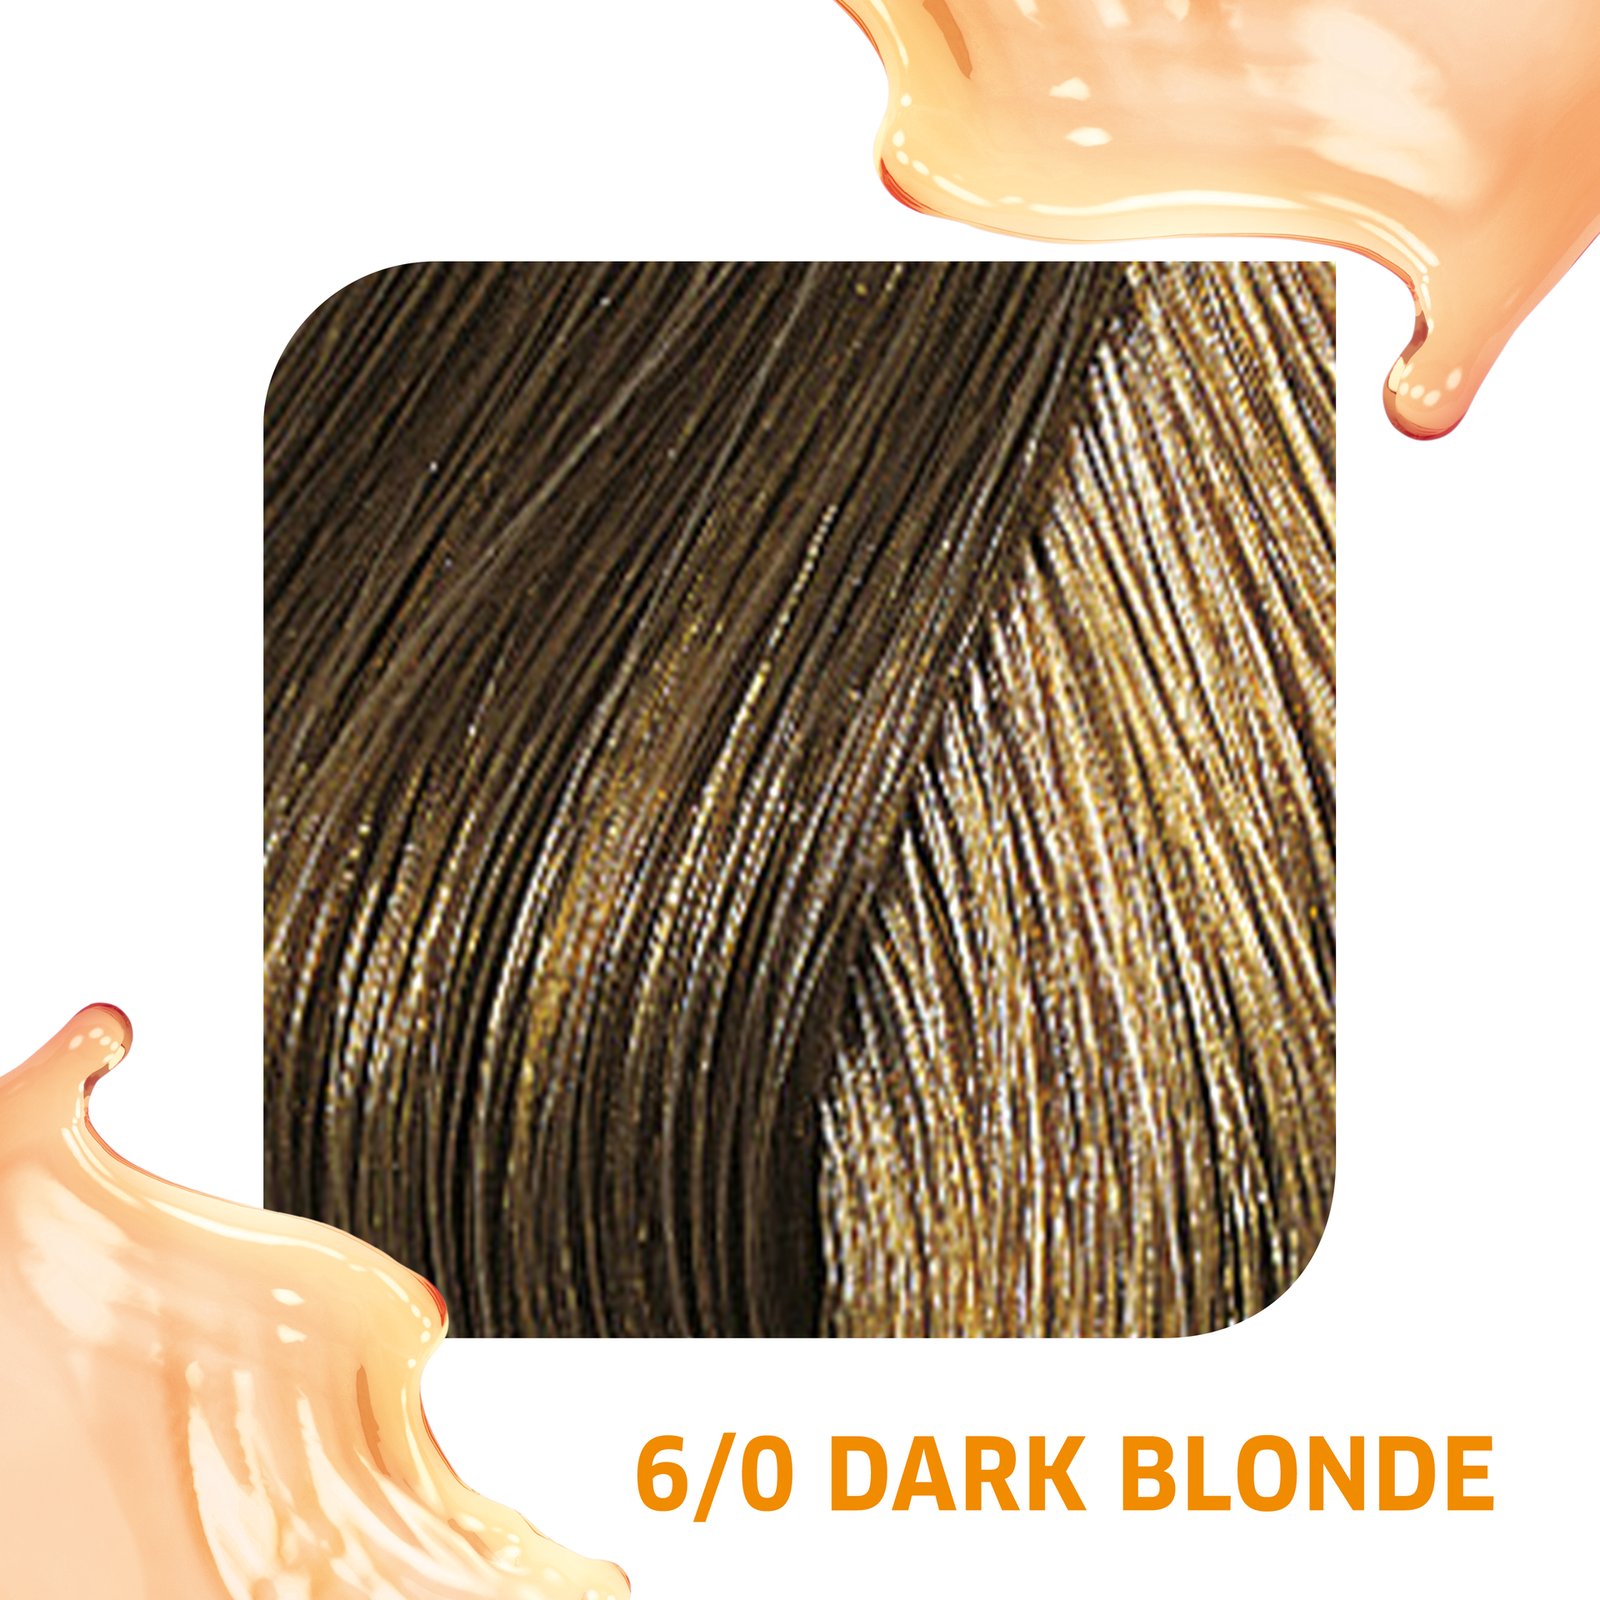 Wella Professionals Color Fresh 6/0 Dark Blonde 75 ml